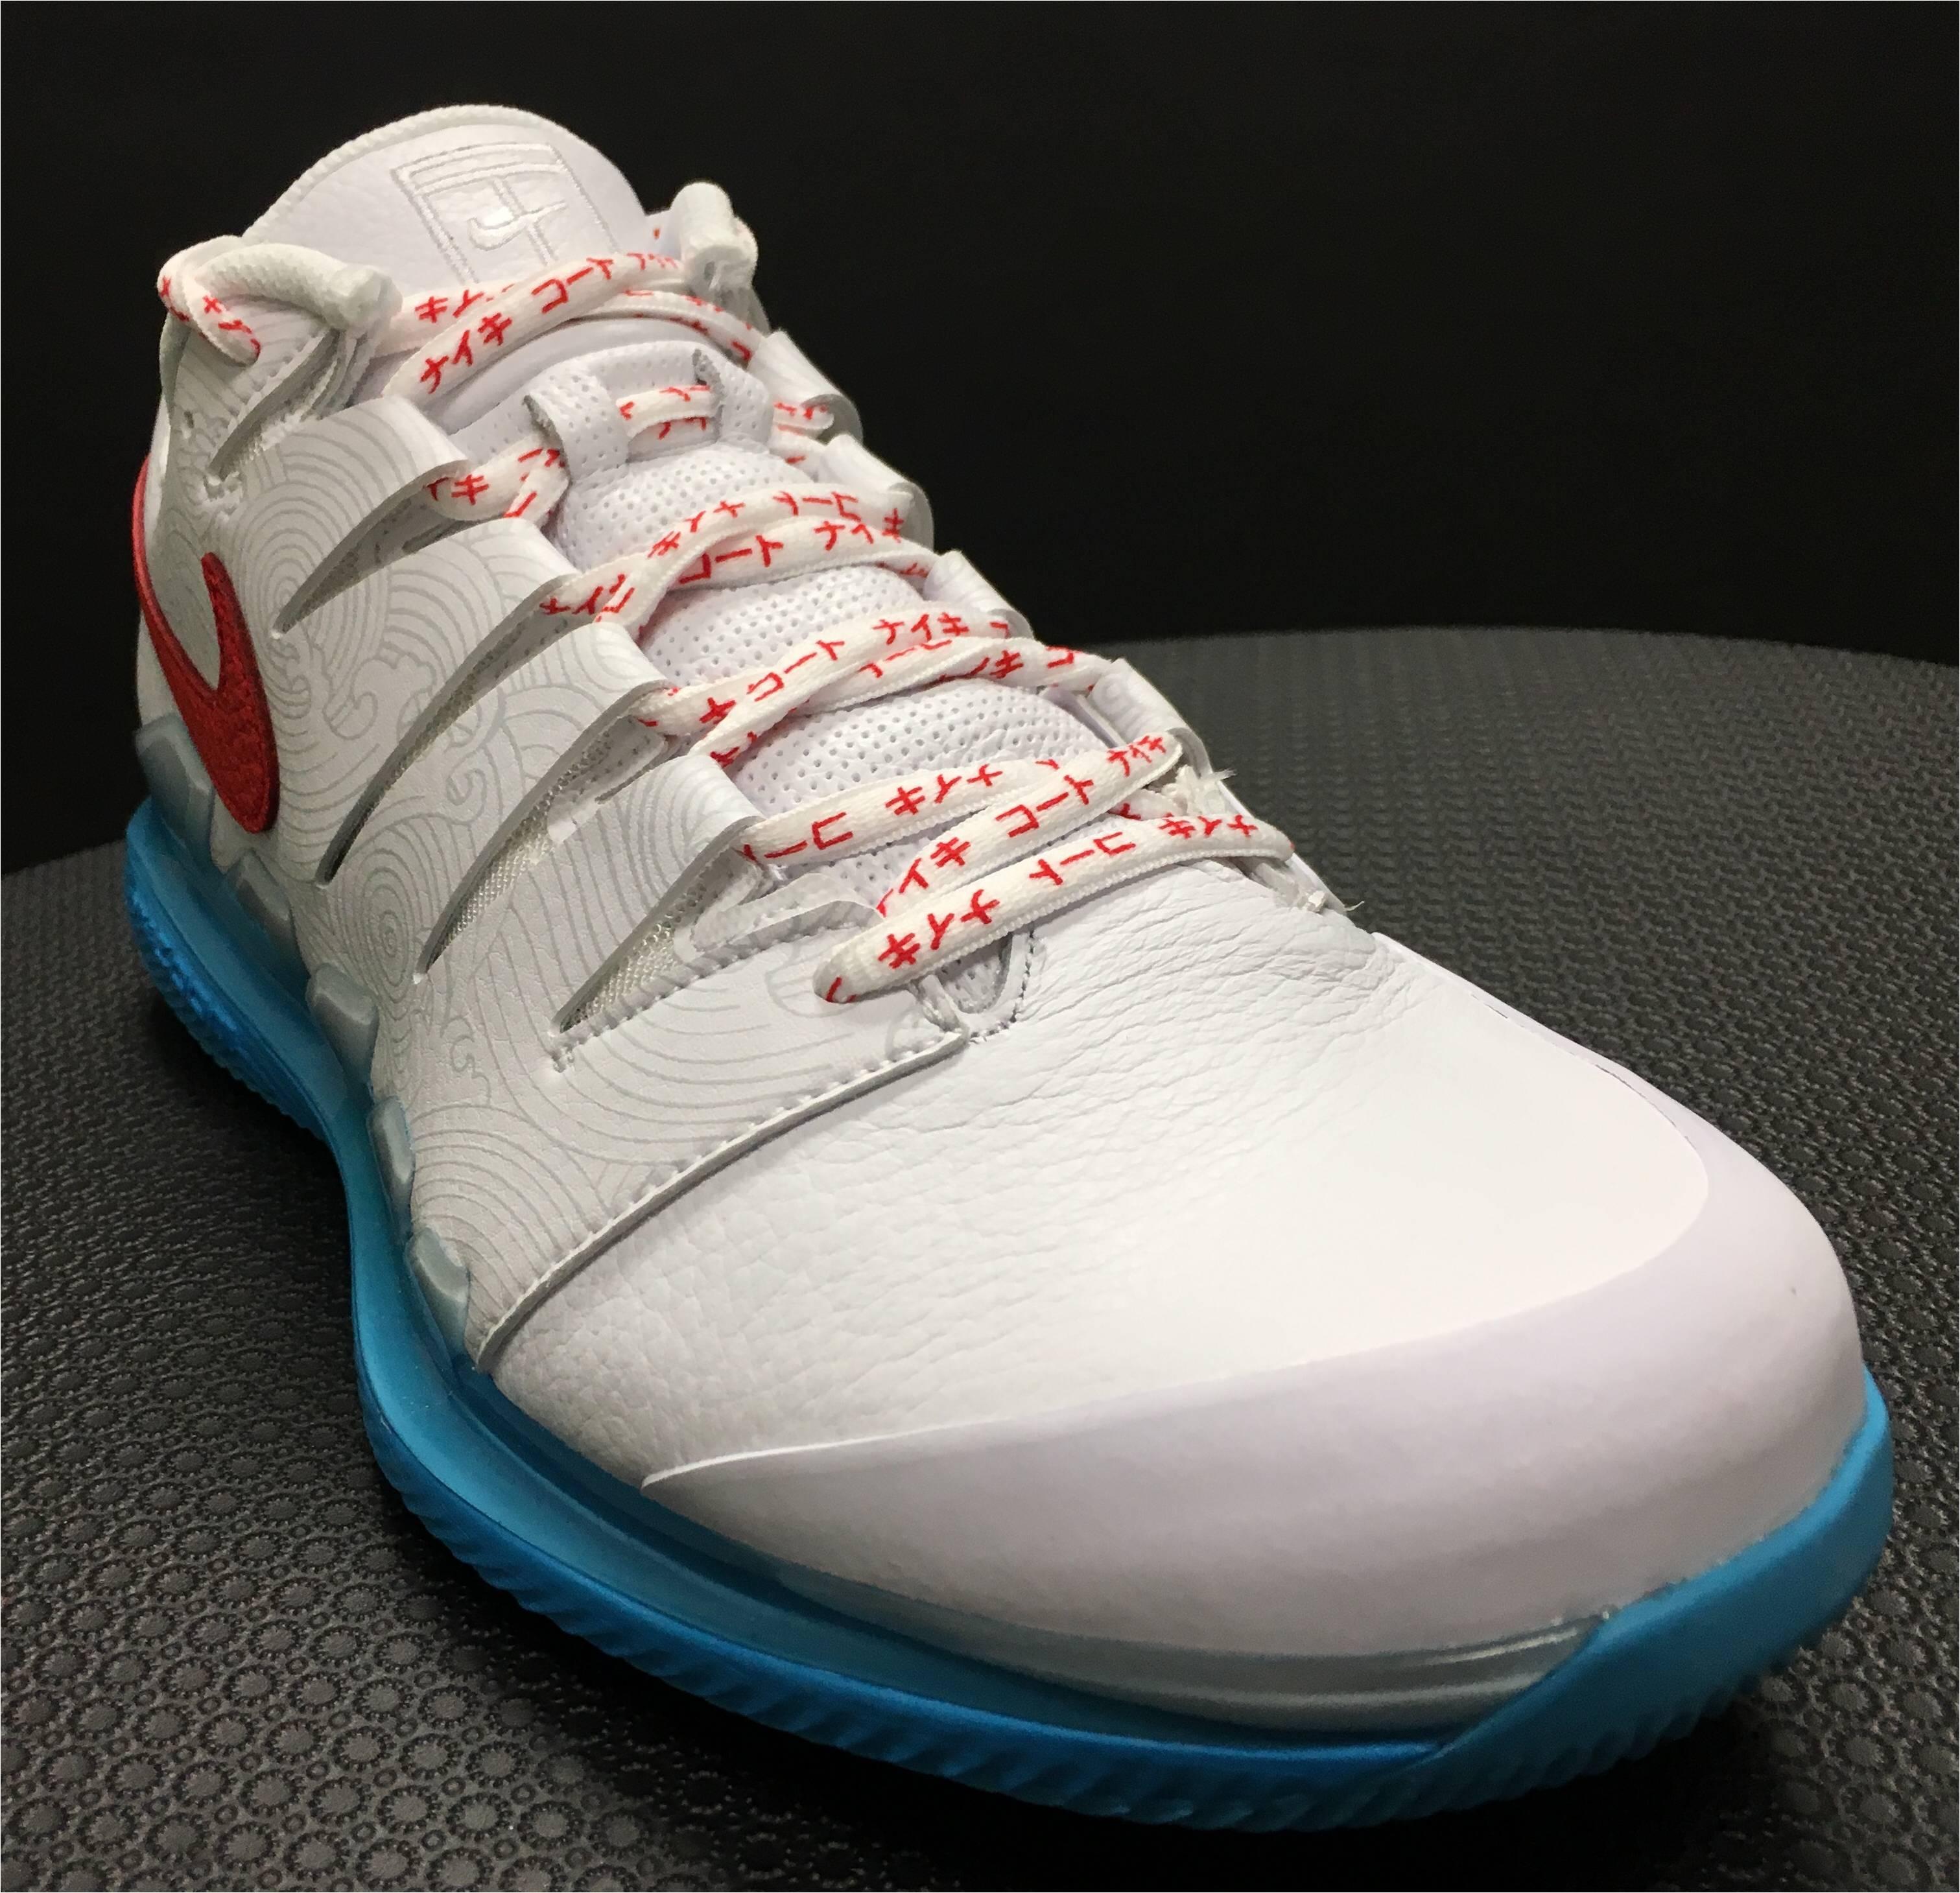 The Inspiration Nike's Kei Nishikori Vapor Tennis Shoe - TENNIS EXPRESS